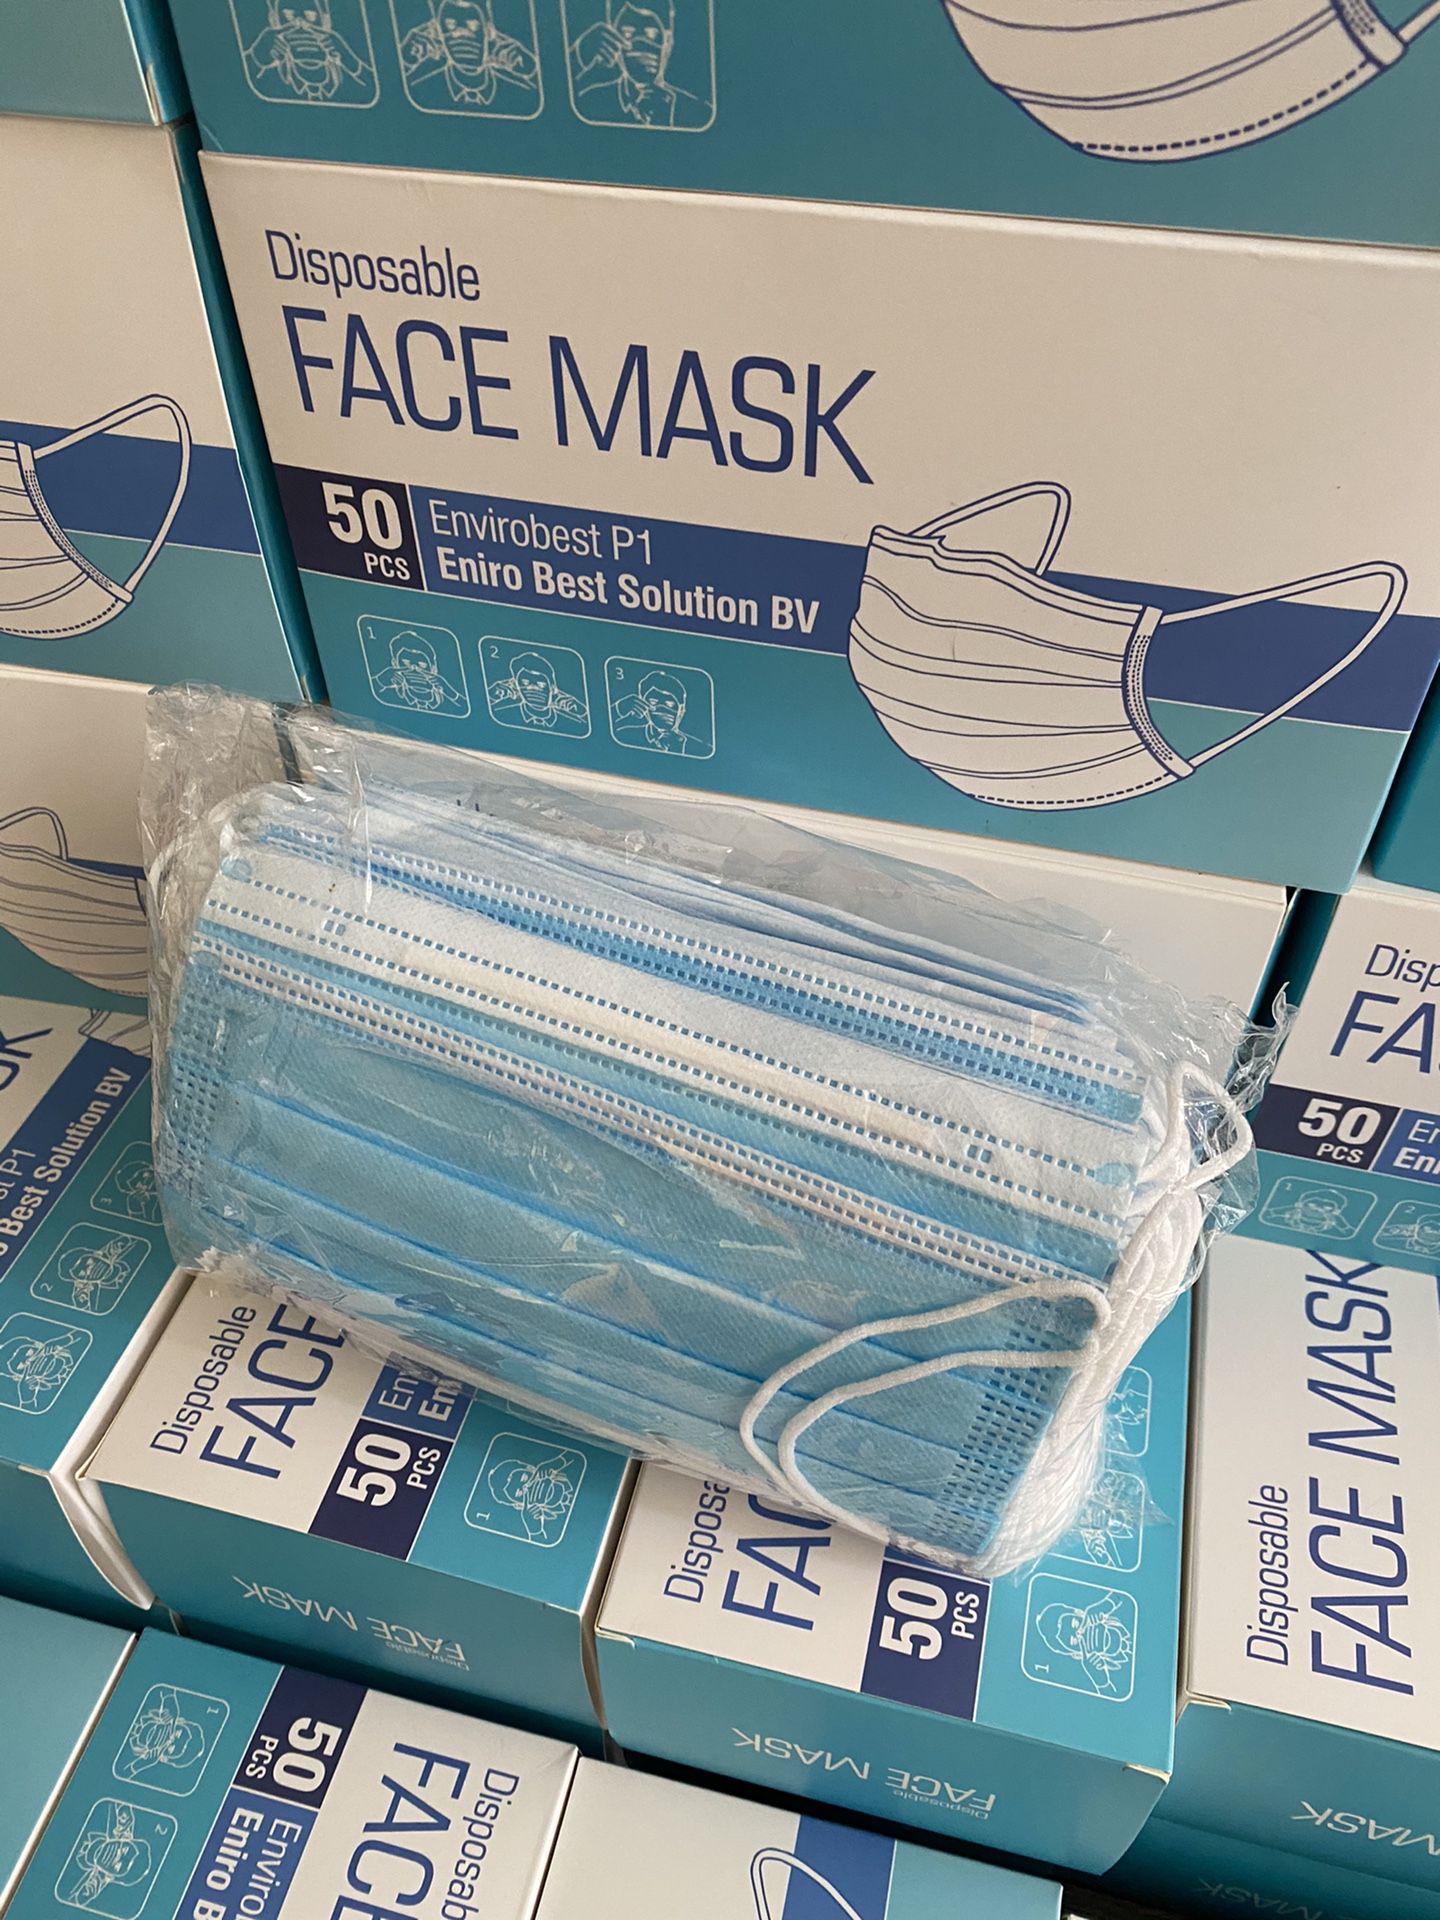 Face mask / Mask 50 pcs each box disposable mask